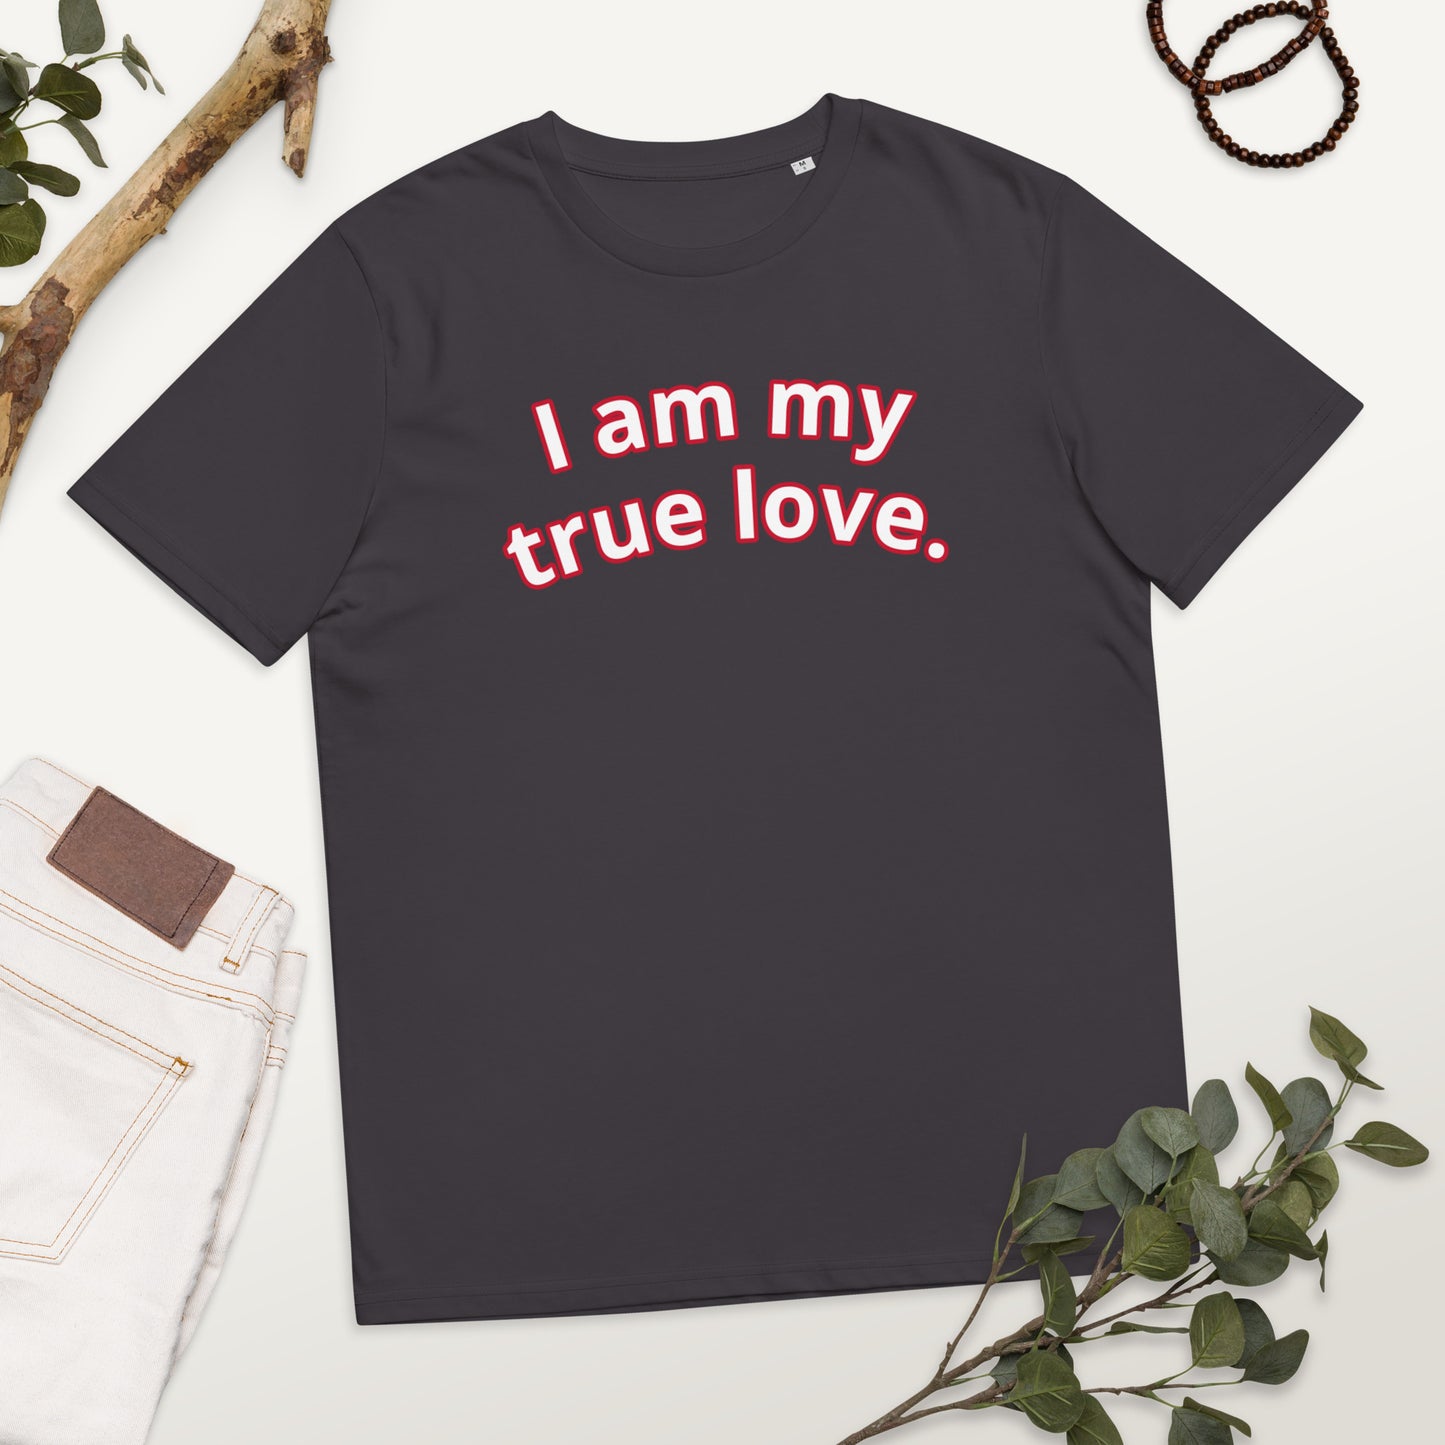 I am my true love. Unisex organic cotton t-shirt